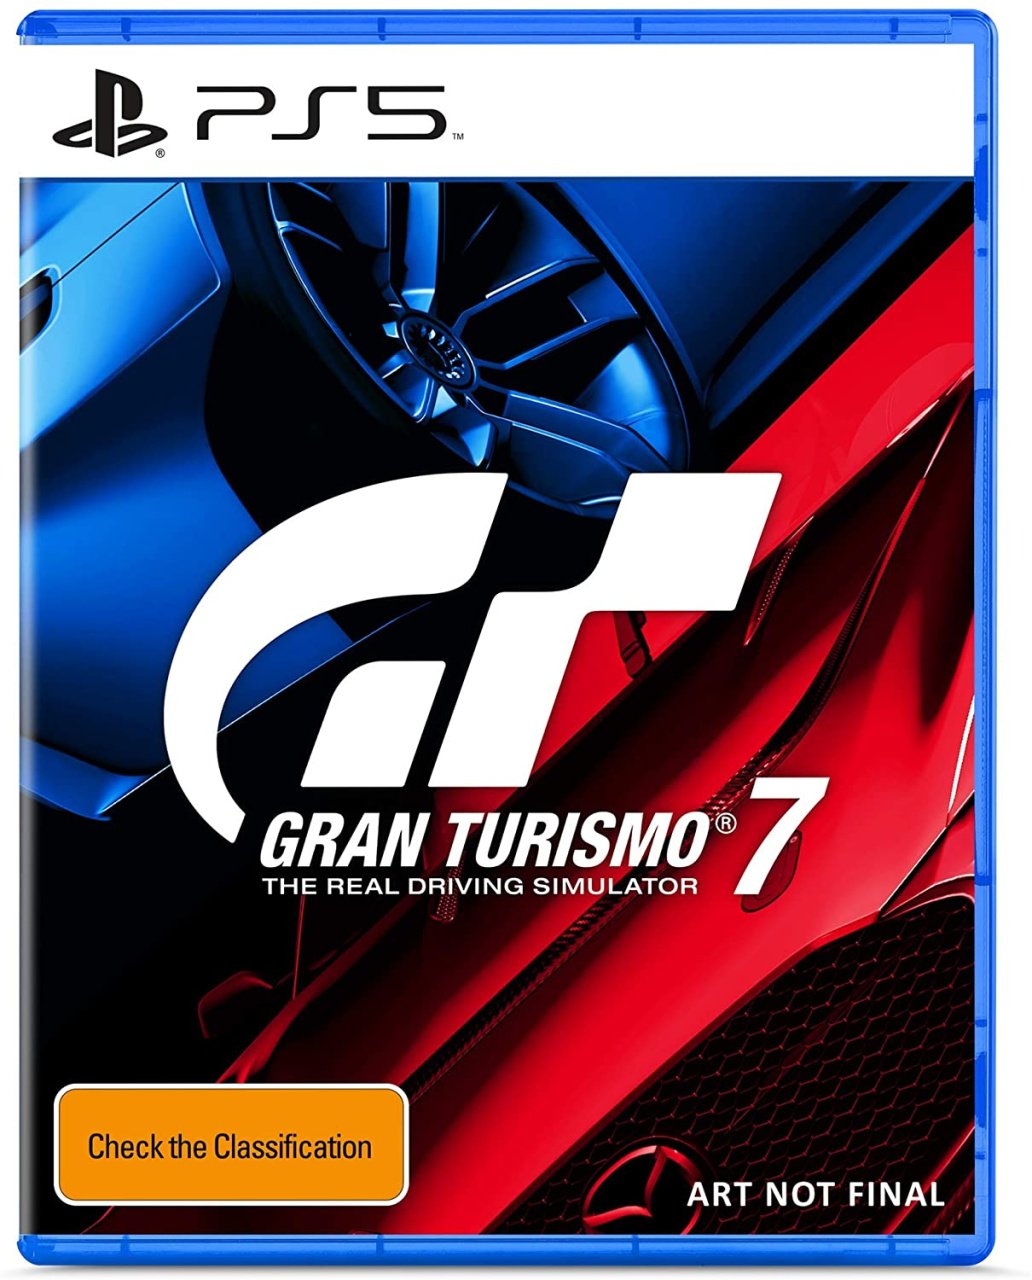 PS5 Placeholder Box Art for Returnal, Gran Turismo 7, More Revealed | Push Square